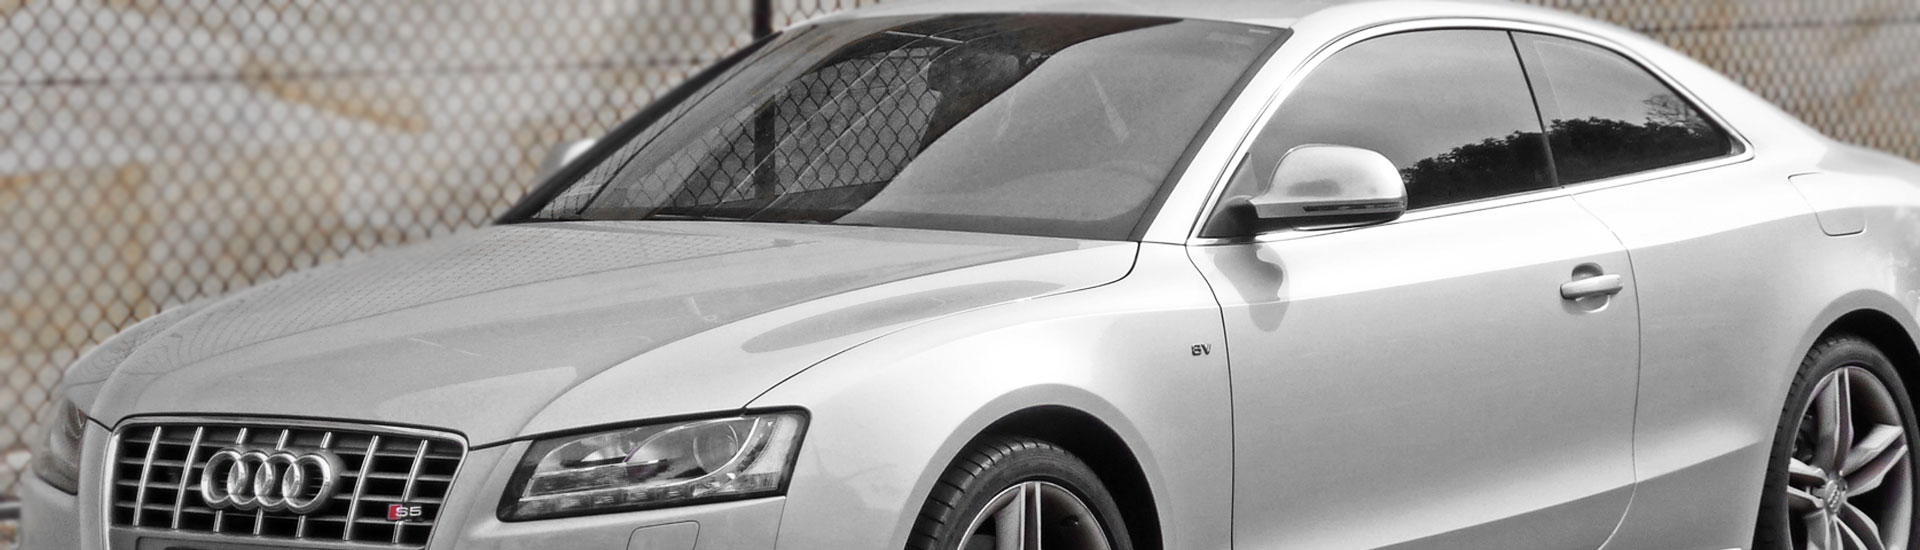 Audi S5 Window Tint